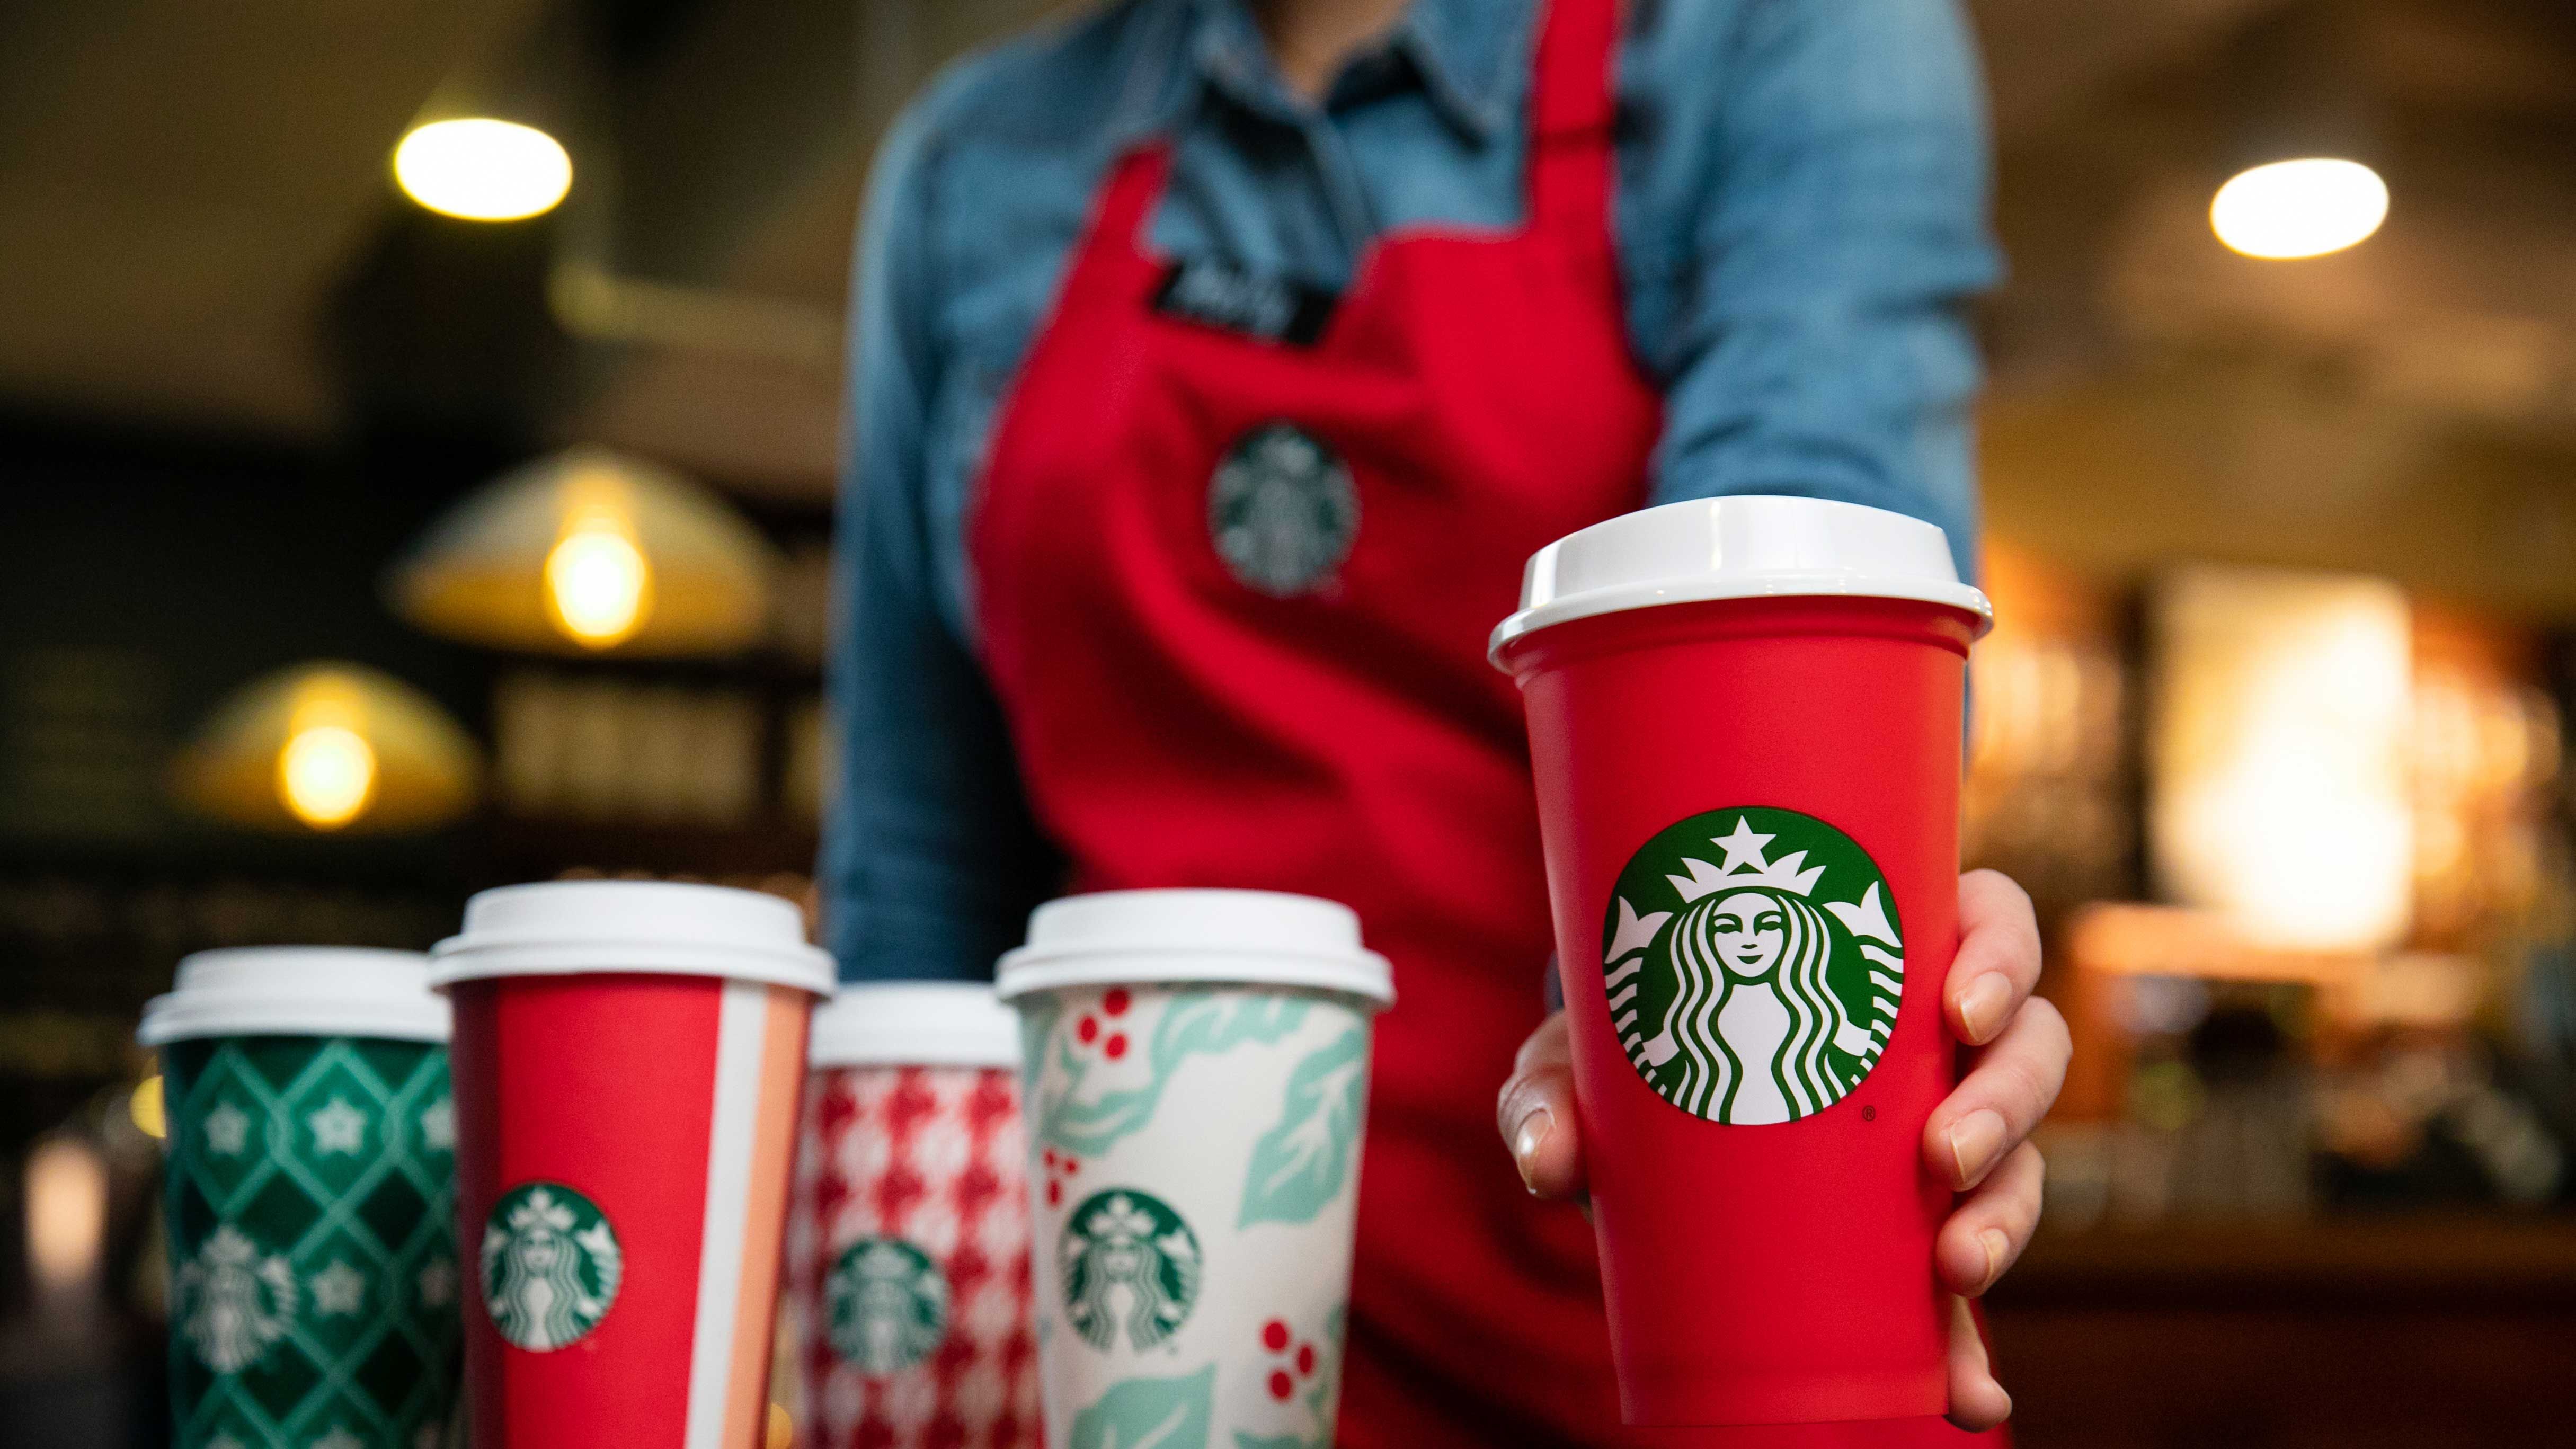 Starbucks, Accessories, Starbucks Holiday Mug Gift Set